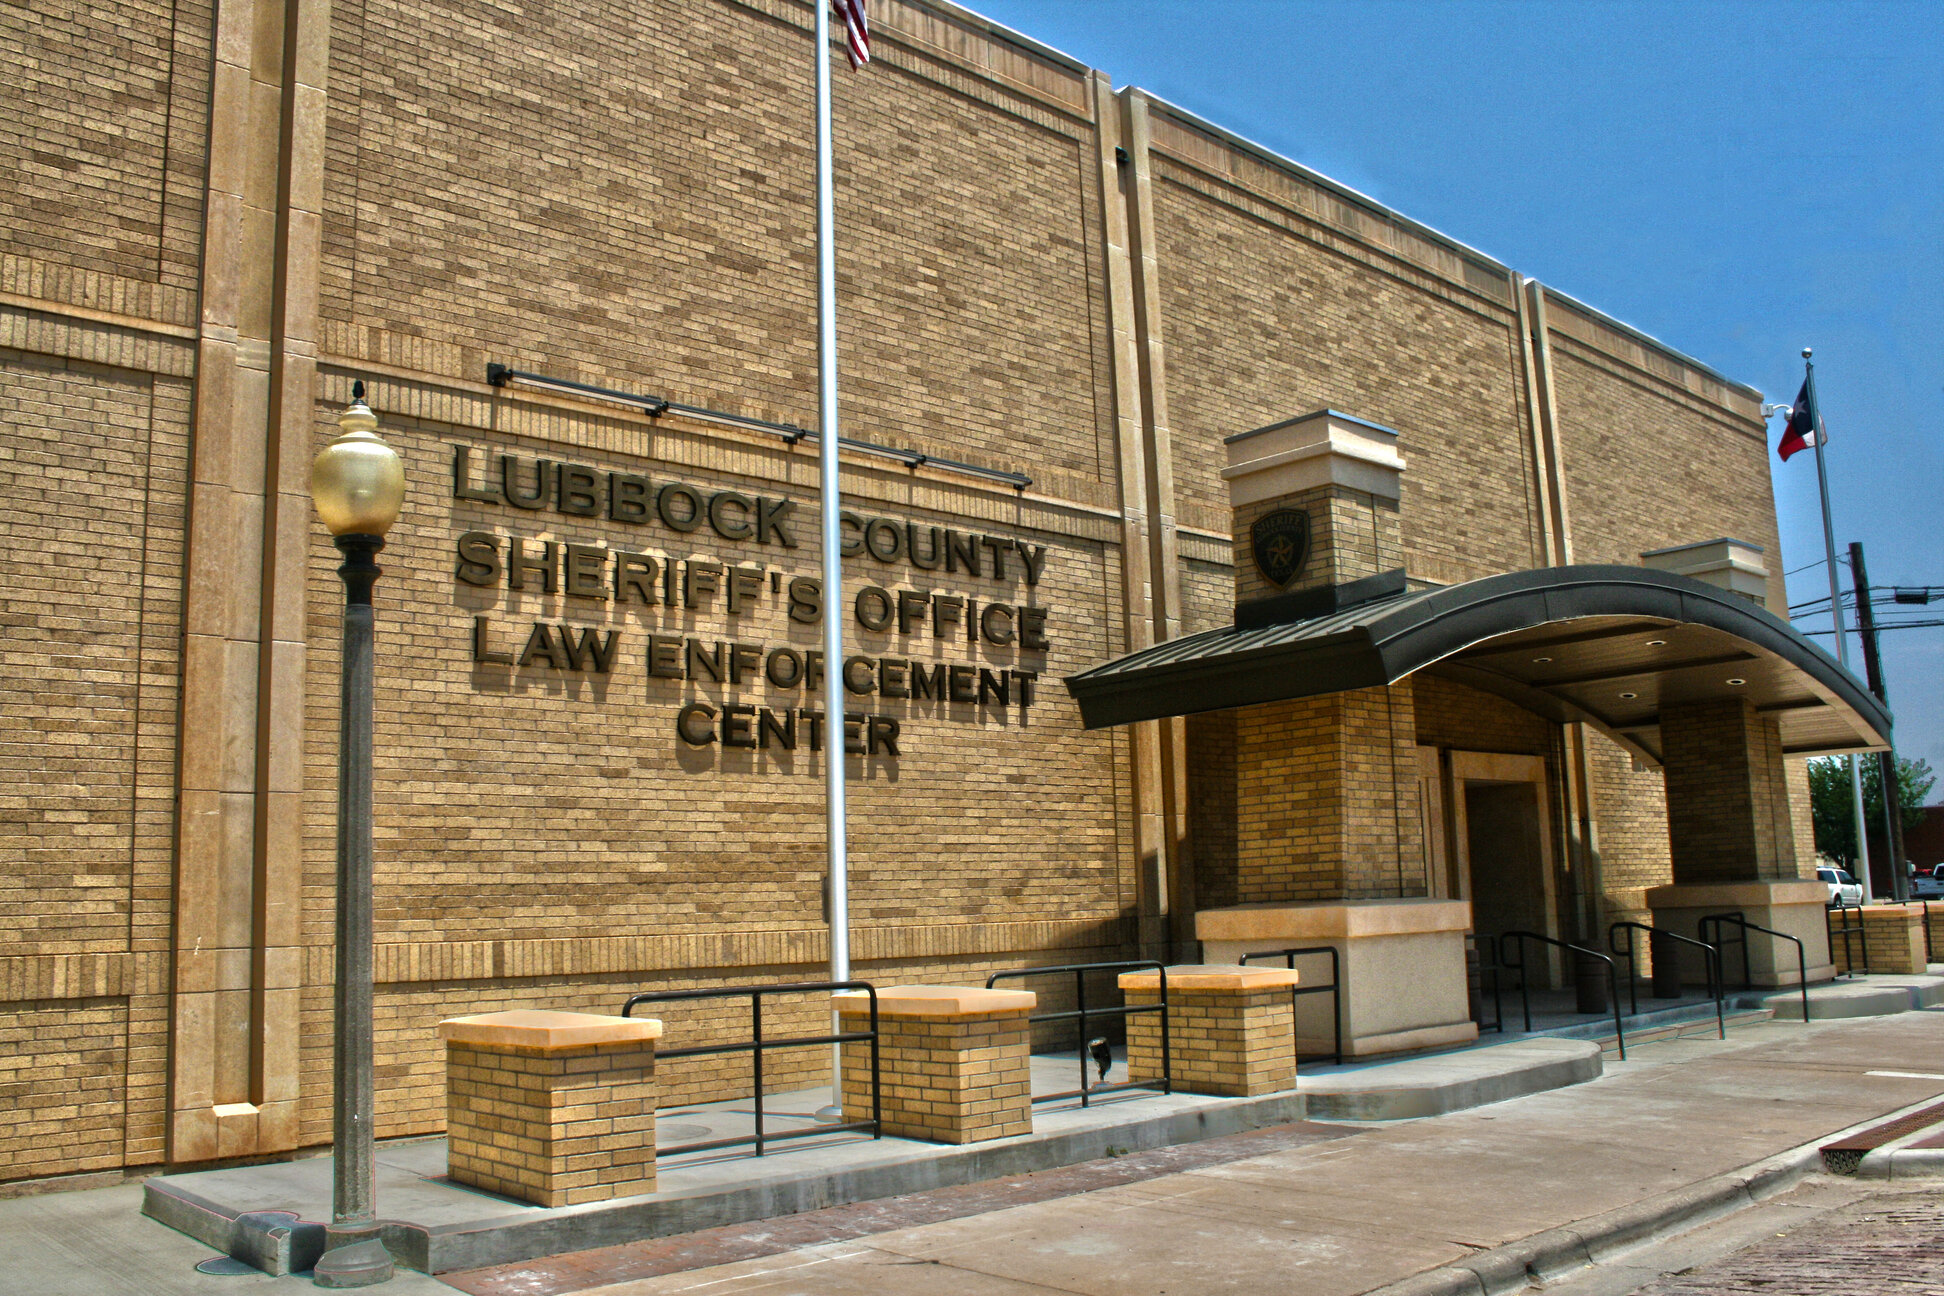 Civic & Government - Lubbock County Law Enforcement Center